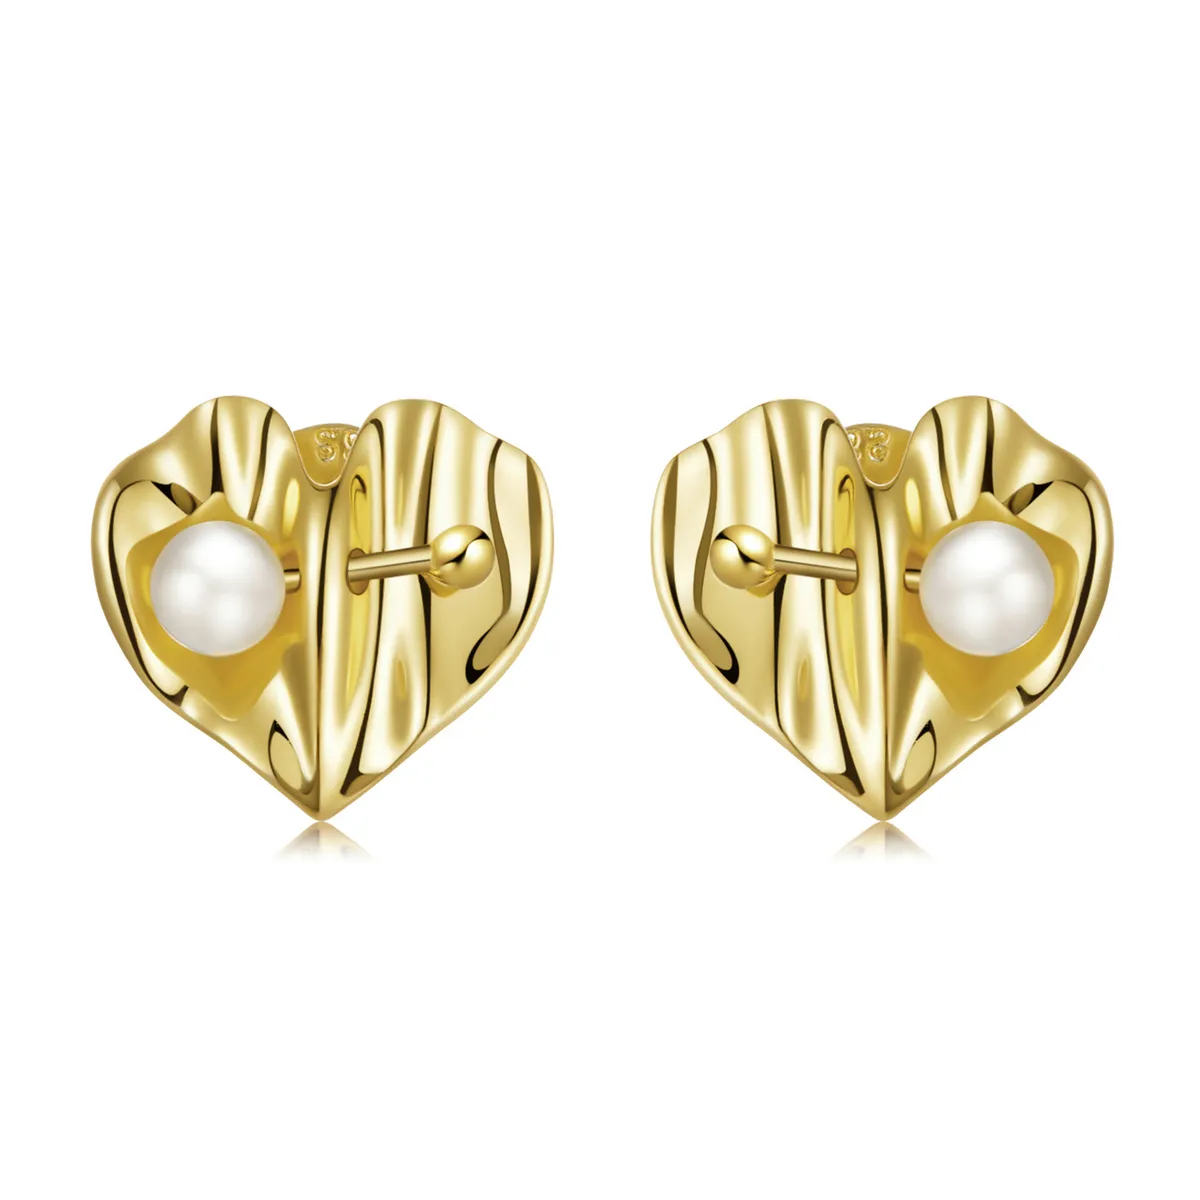 Pandora Style Love Shell Beads - Texture Stud Earrings - BSE551